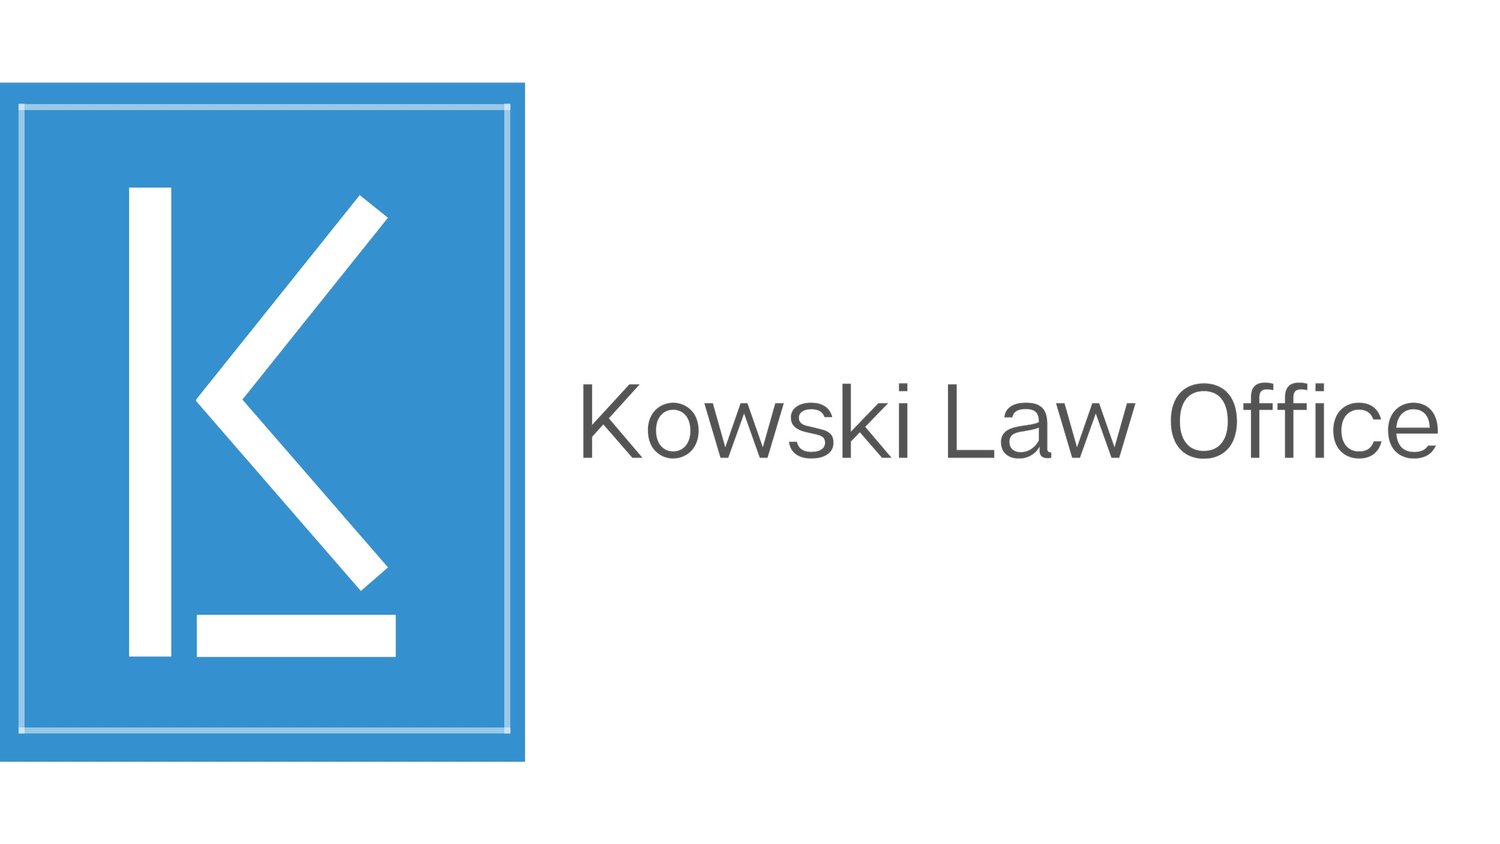 Kowski Law Office